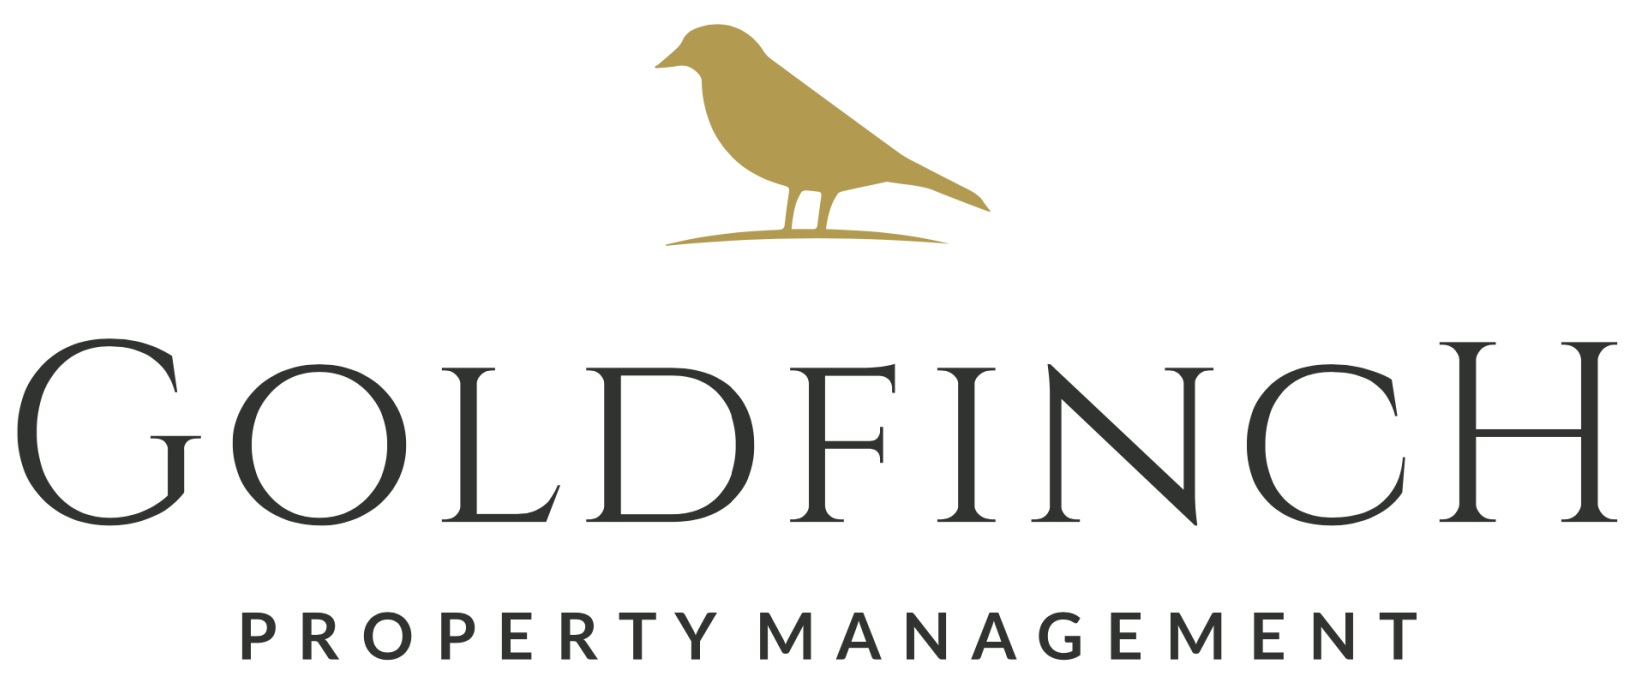 Goldfinch Property Management logo